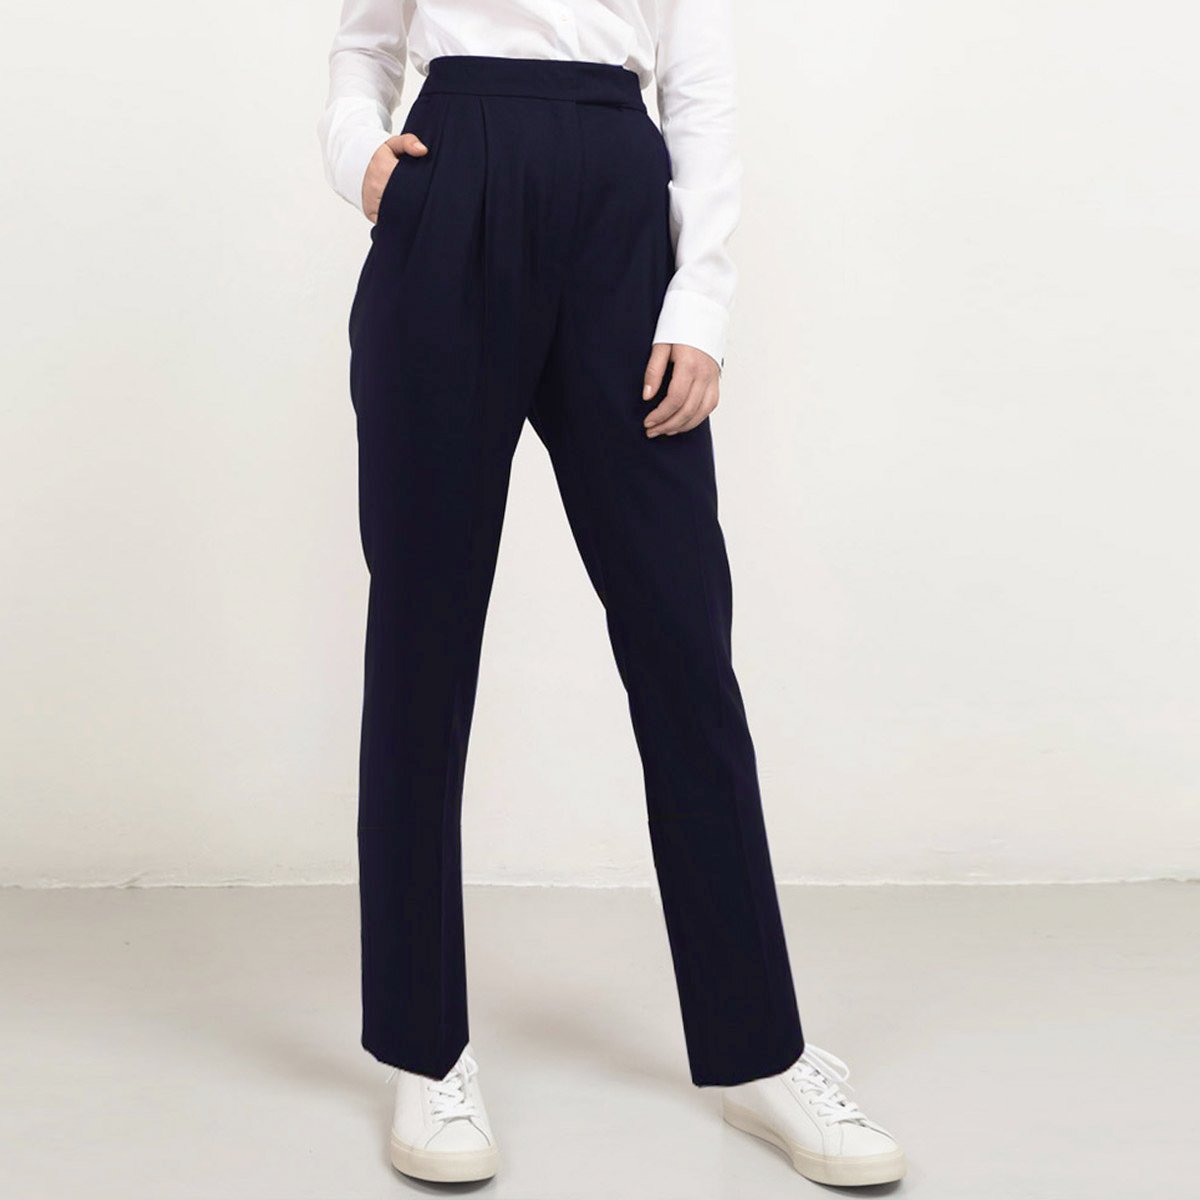 Long navy wool trousers